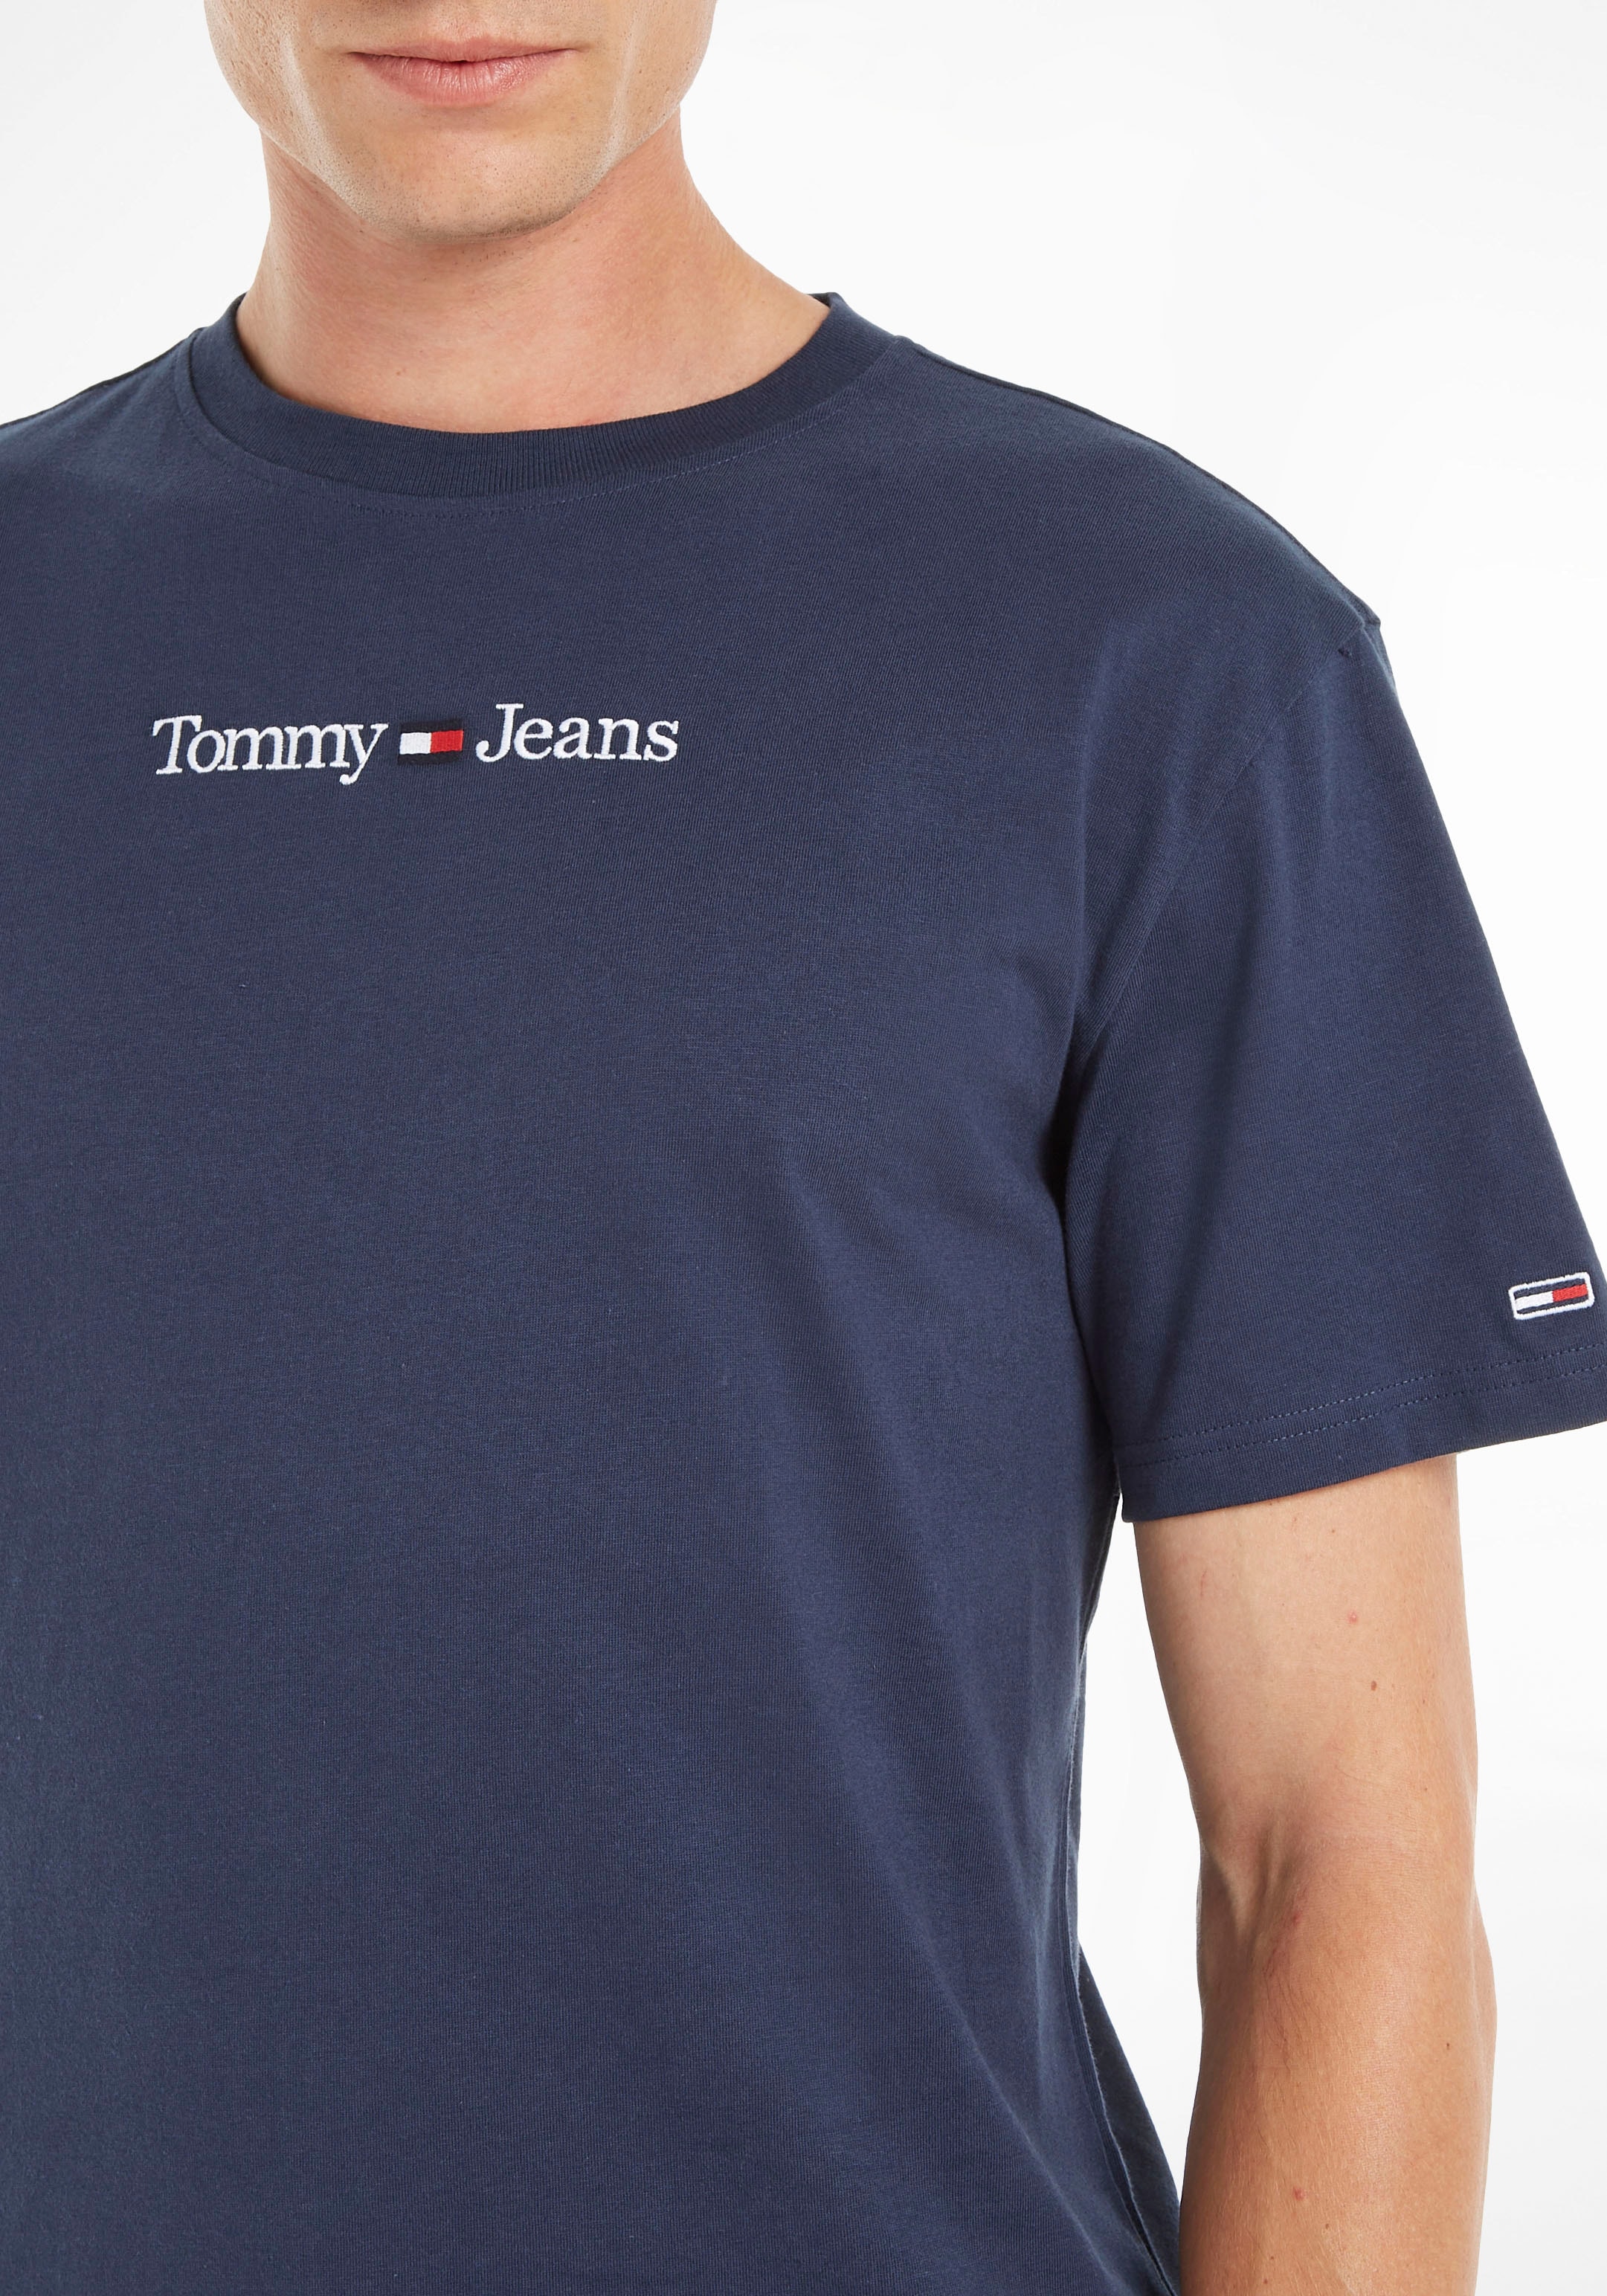 CLASSIC OTTO Logostickerei T-Shirt Tommy shoppen LINEAR bei Jeans »TJM mit TEE«, LOGO online